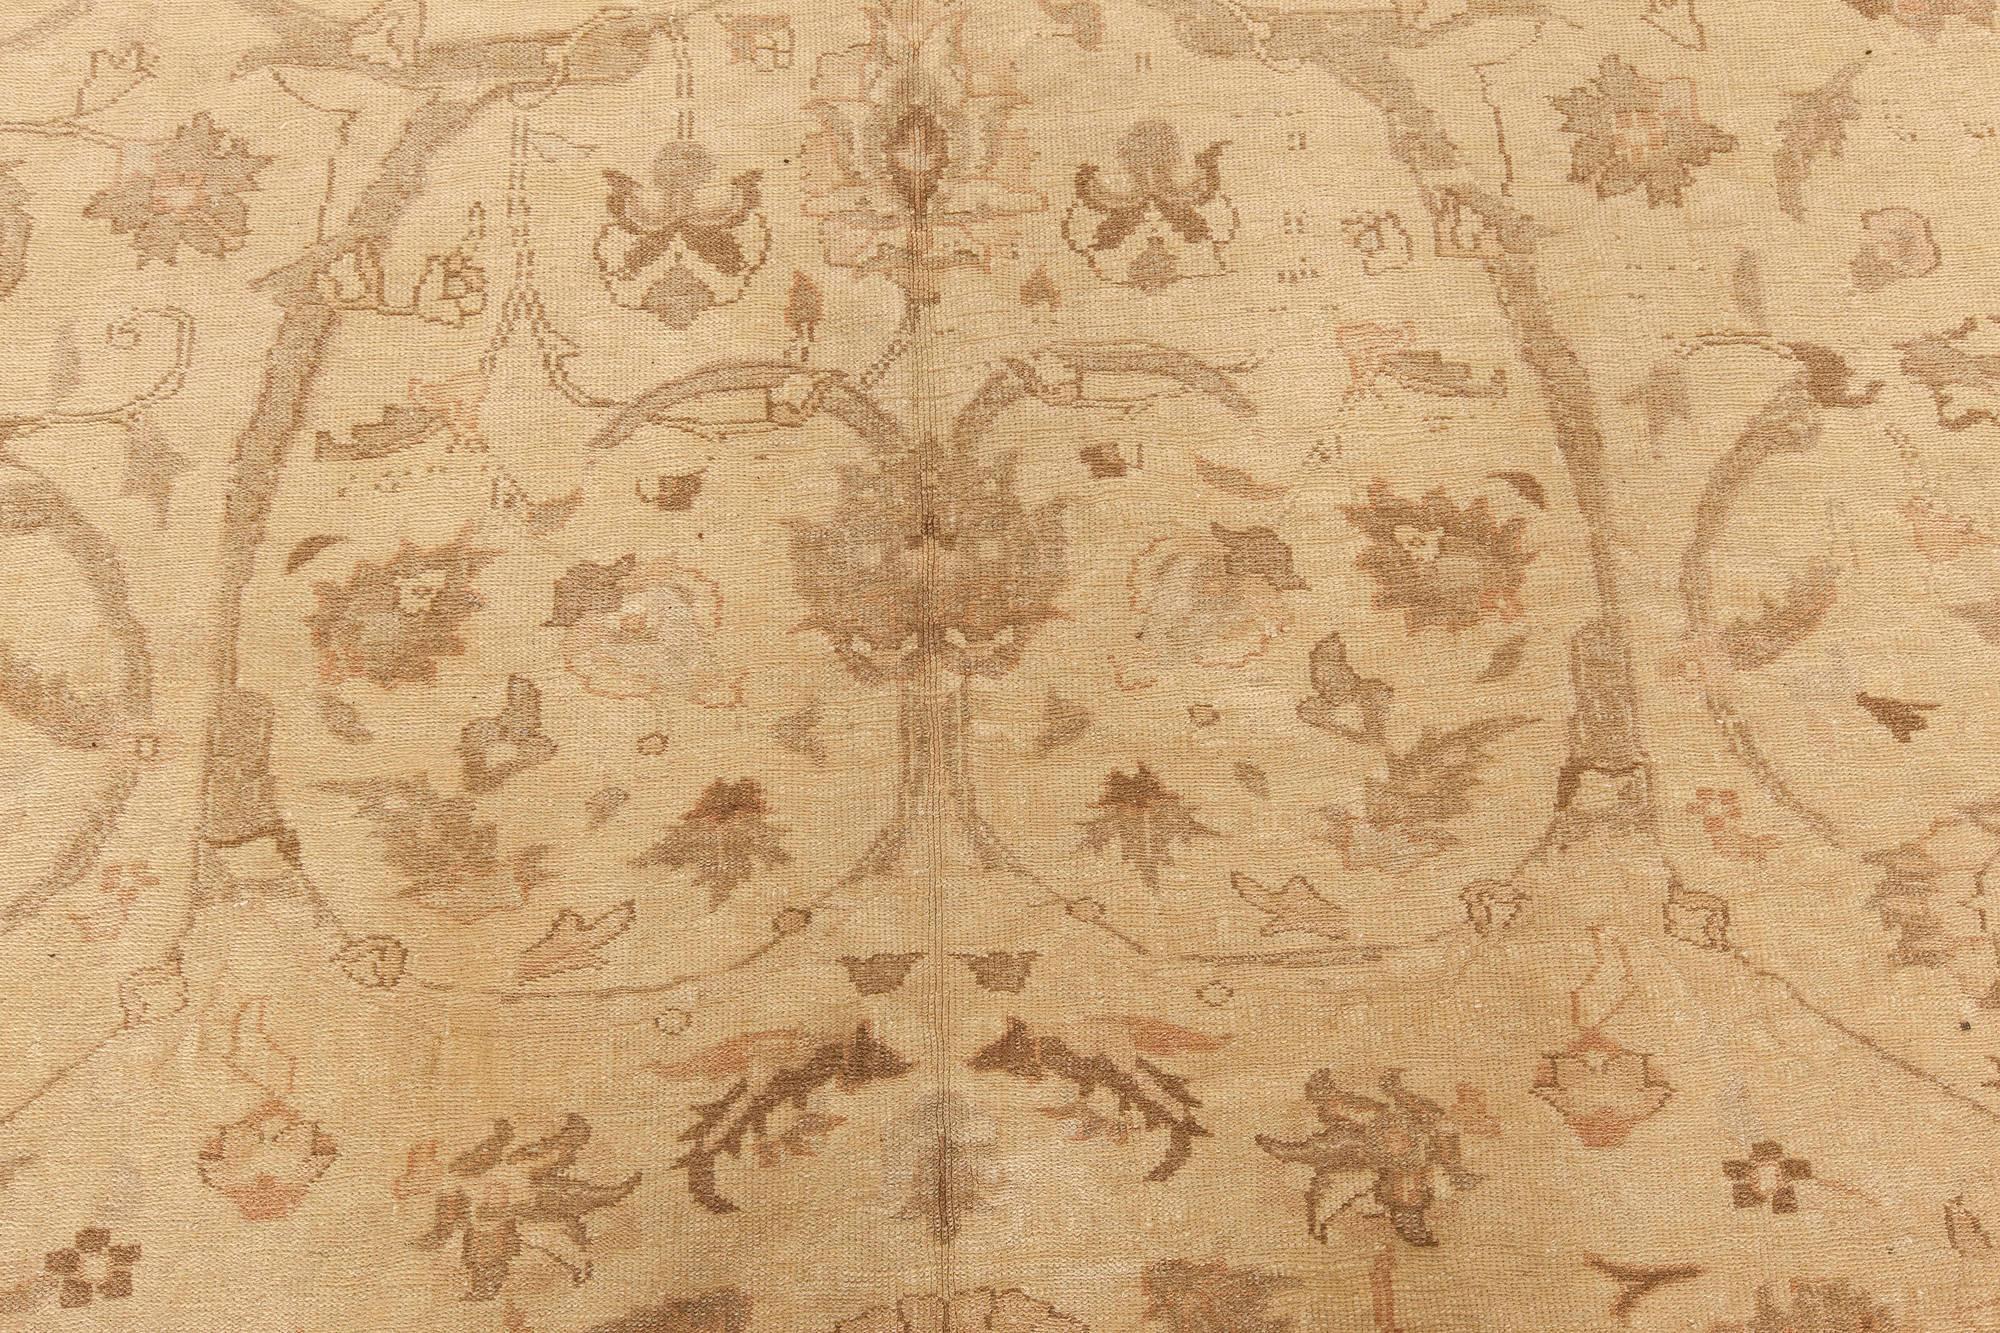 Modern Traditional oriental inspired handmade rug by Doris Leslie Blau.
Size: 9'0